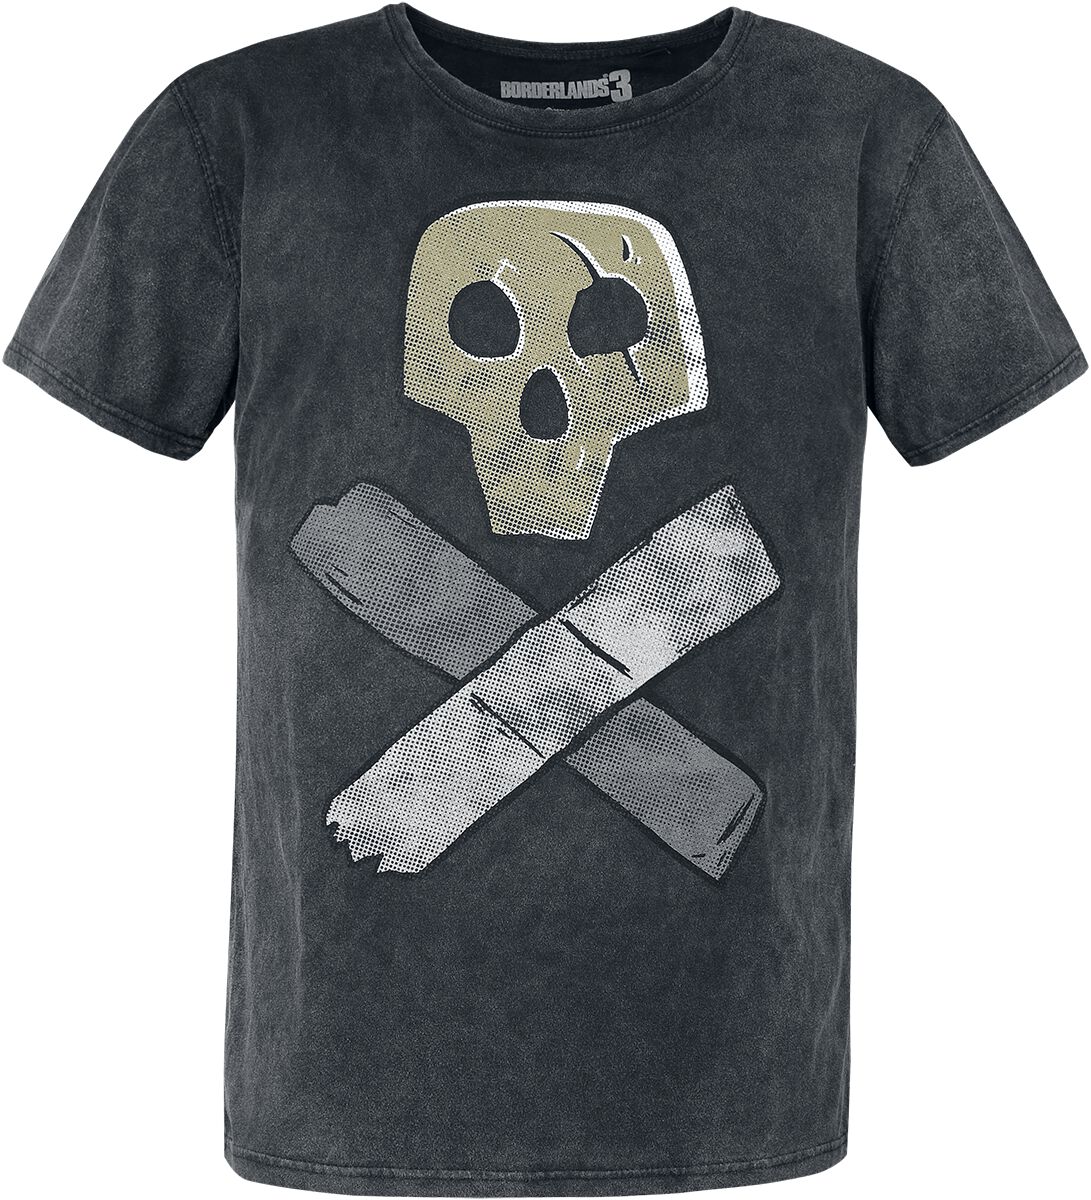 Borderlands 3 - Skull T-Shirt grau in M